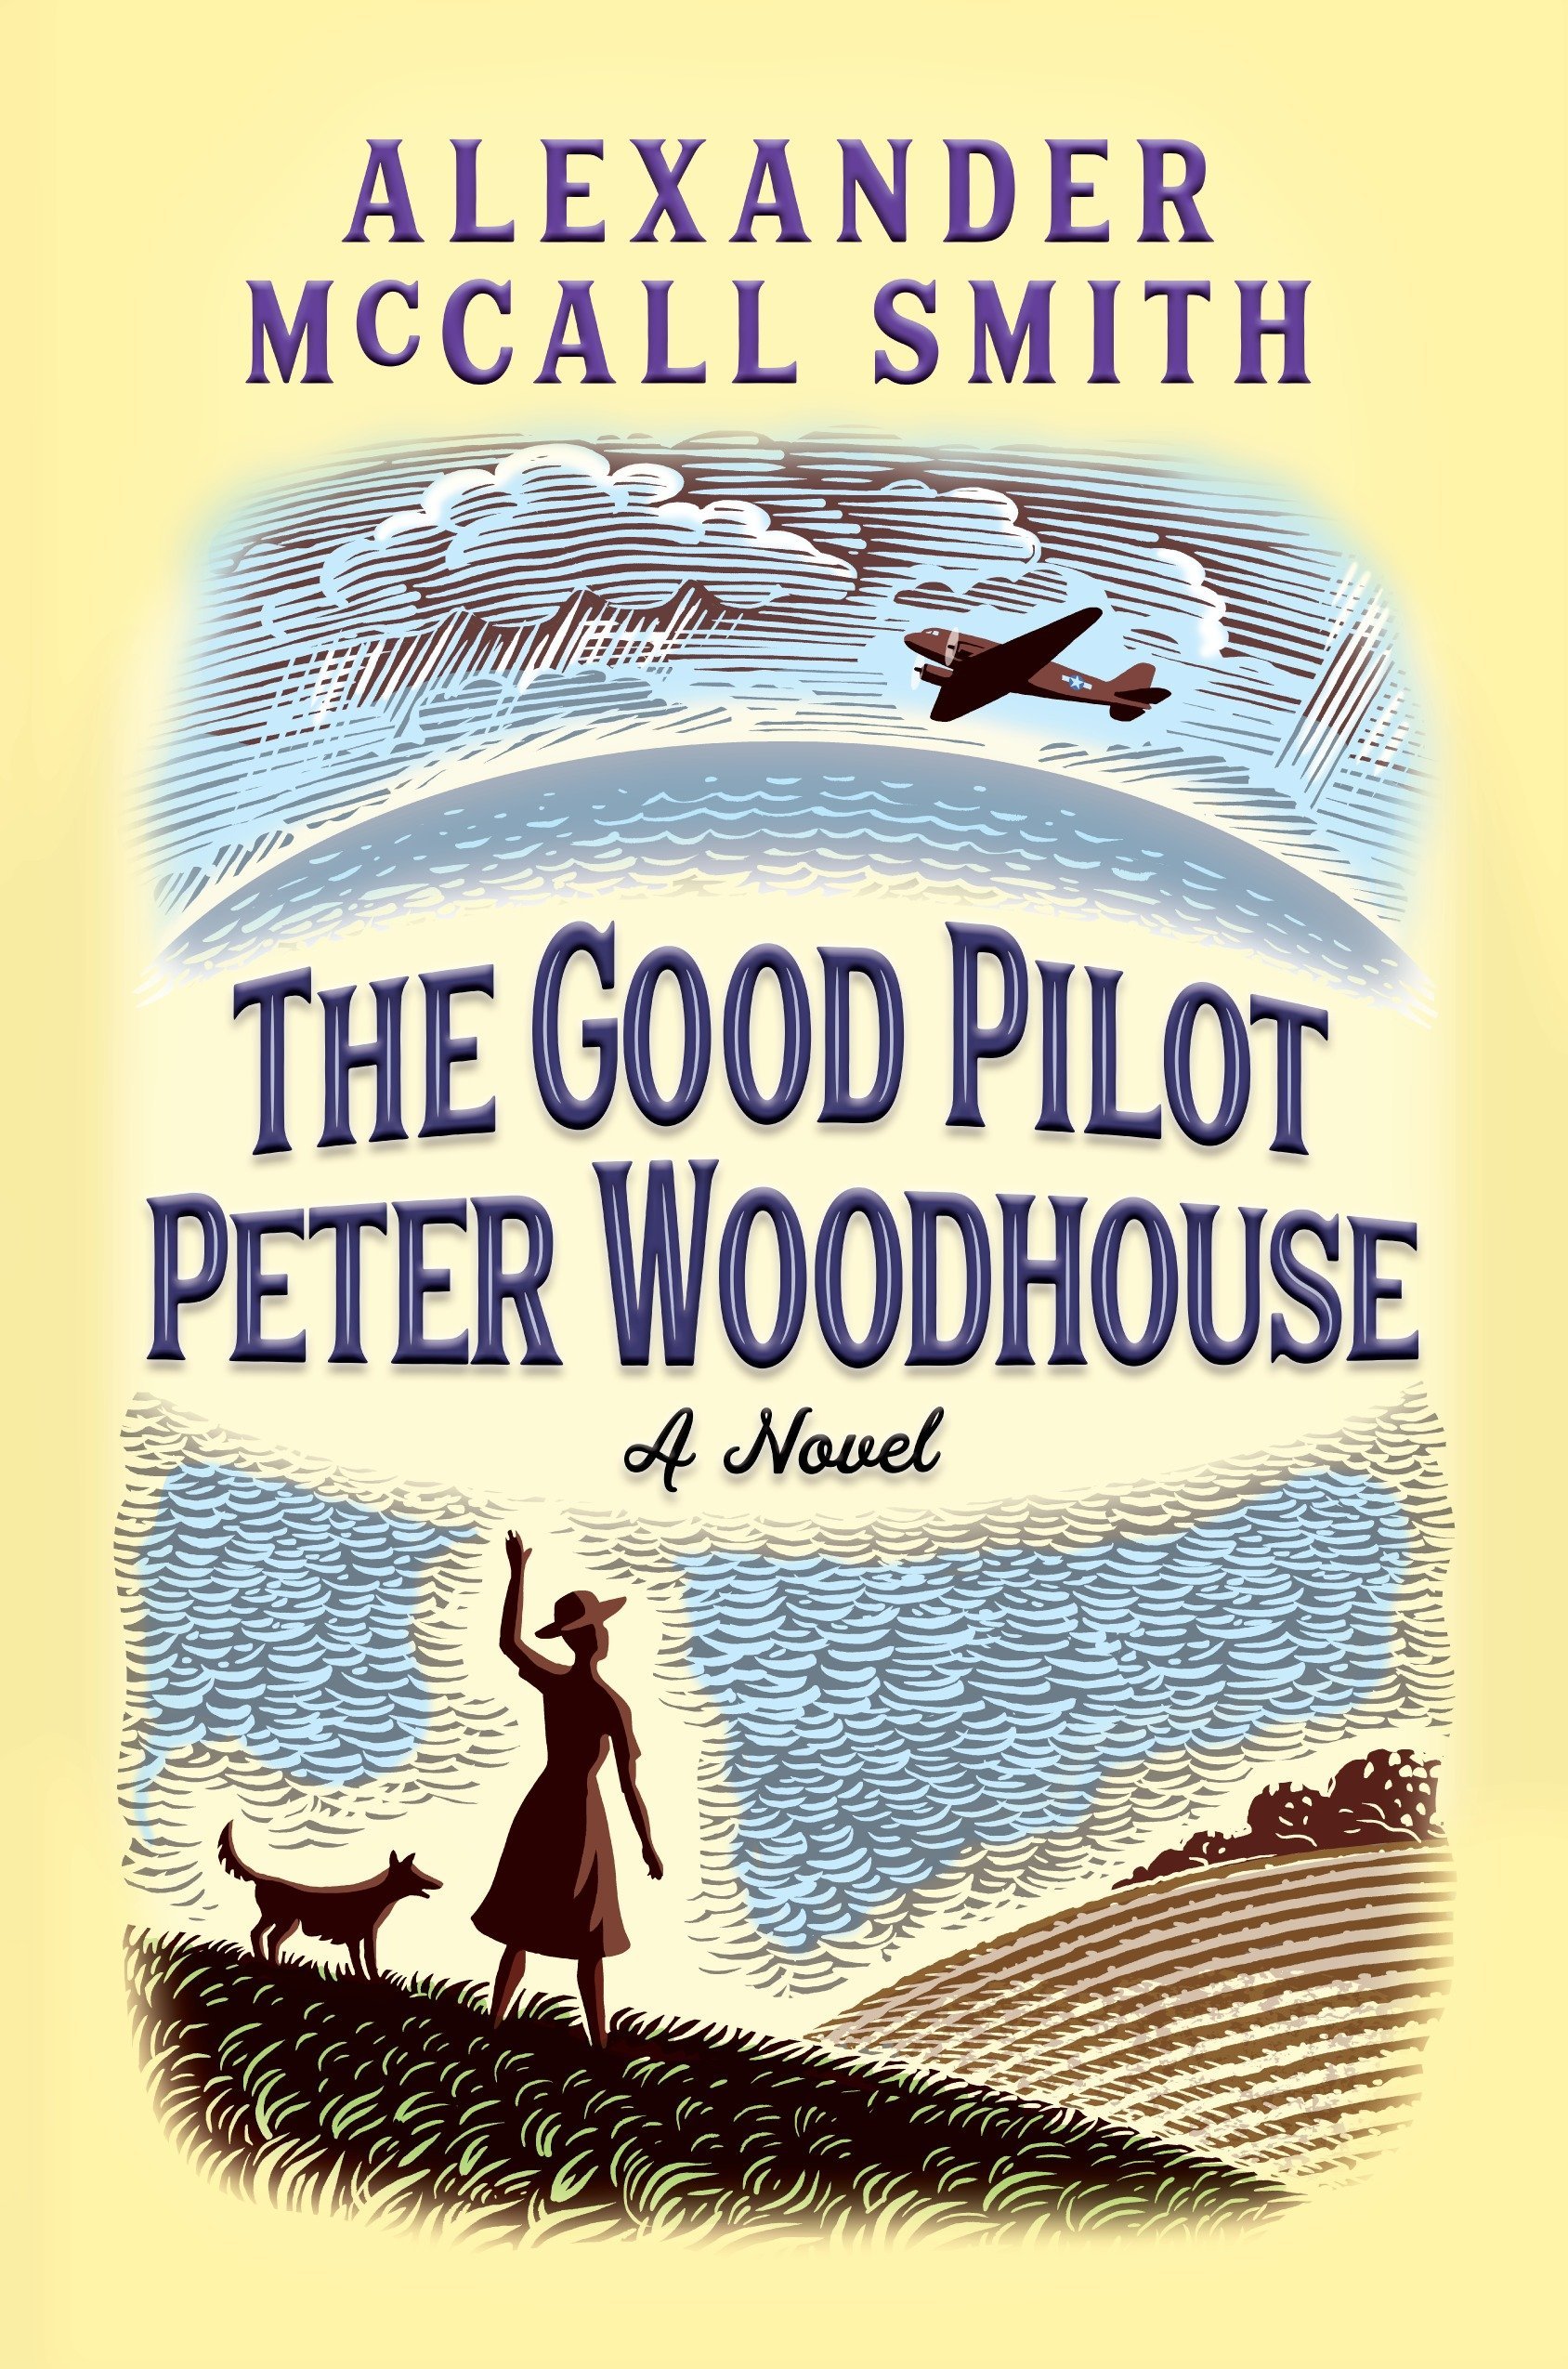 The Good Pilot Peter Woodhouse: A Novel